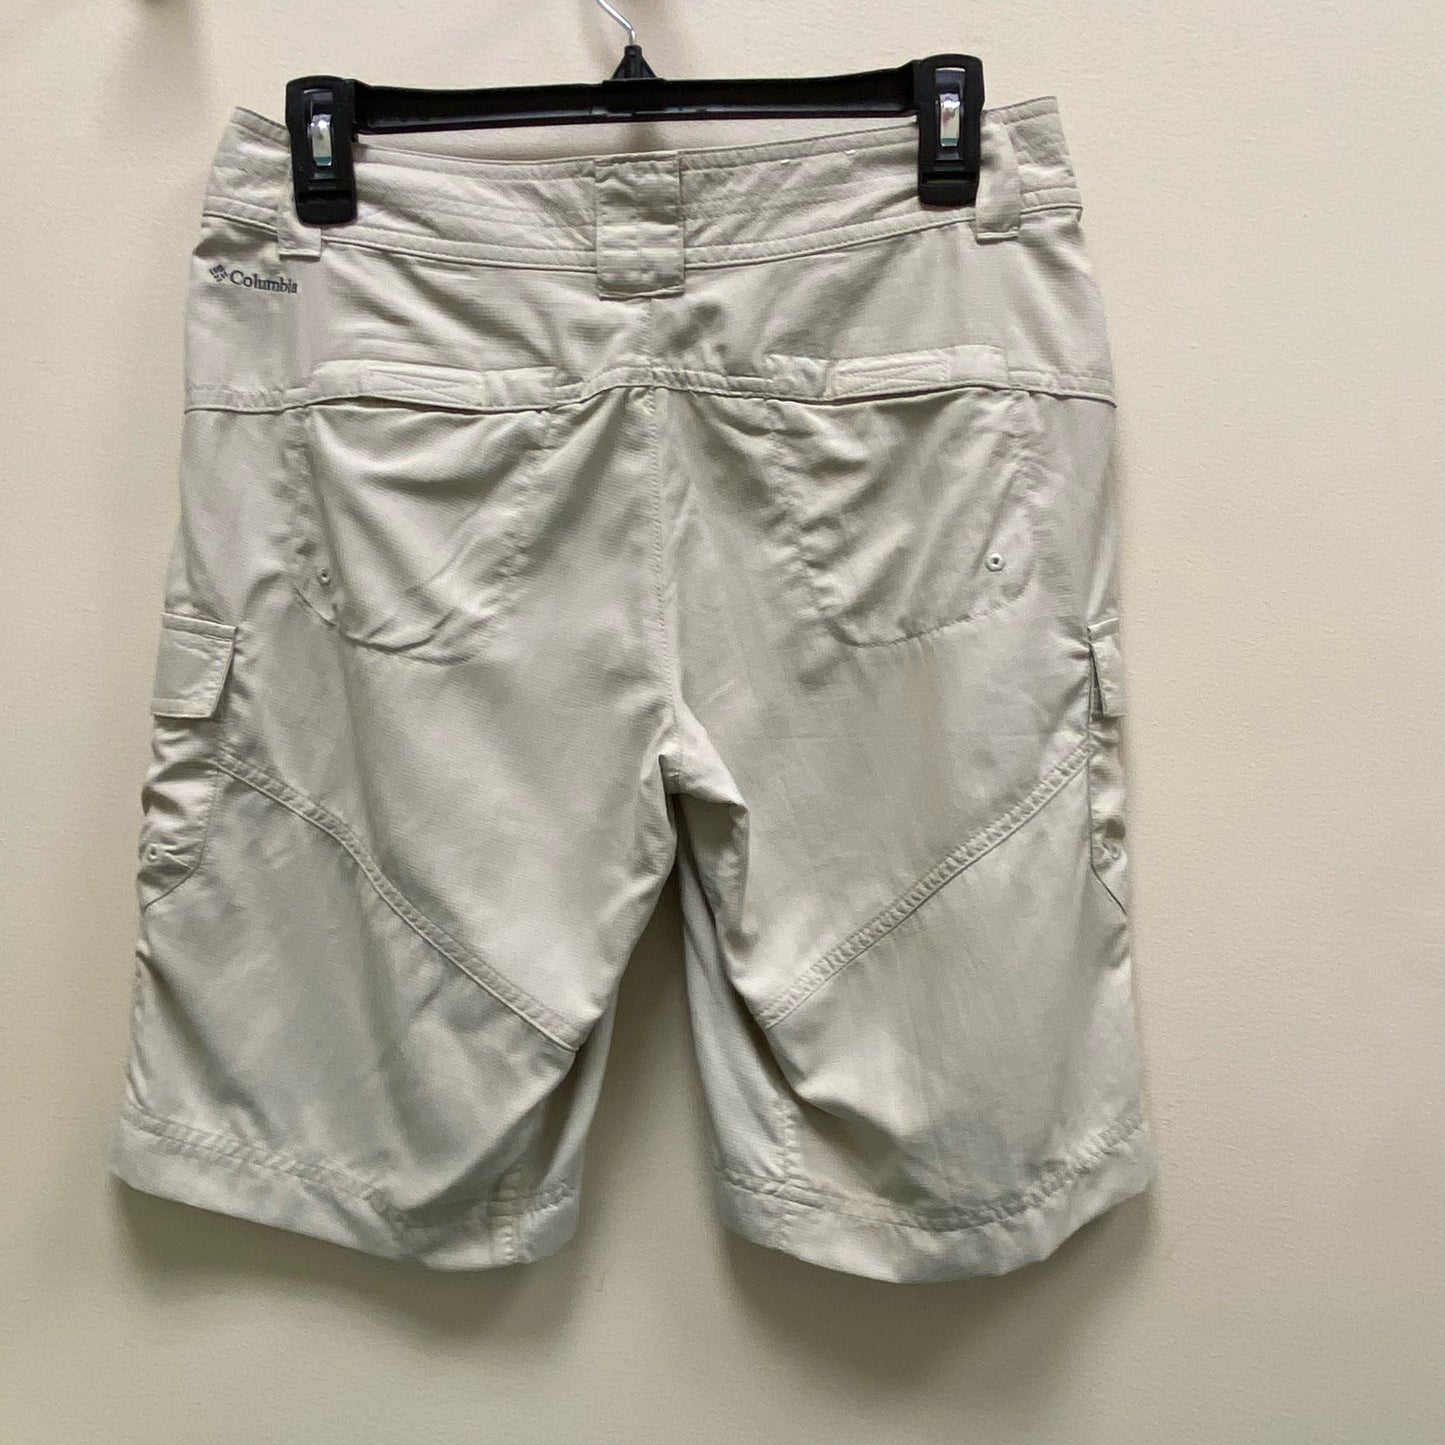 Columbia East Ridge 10" Shorts - Size 4